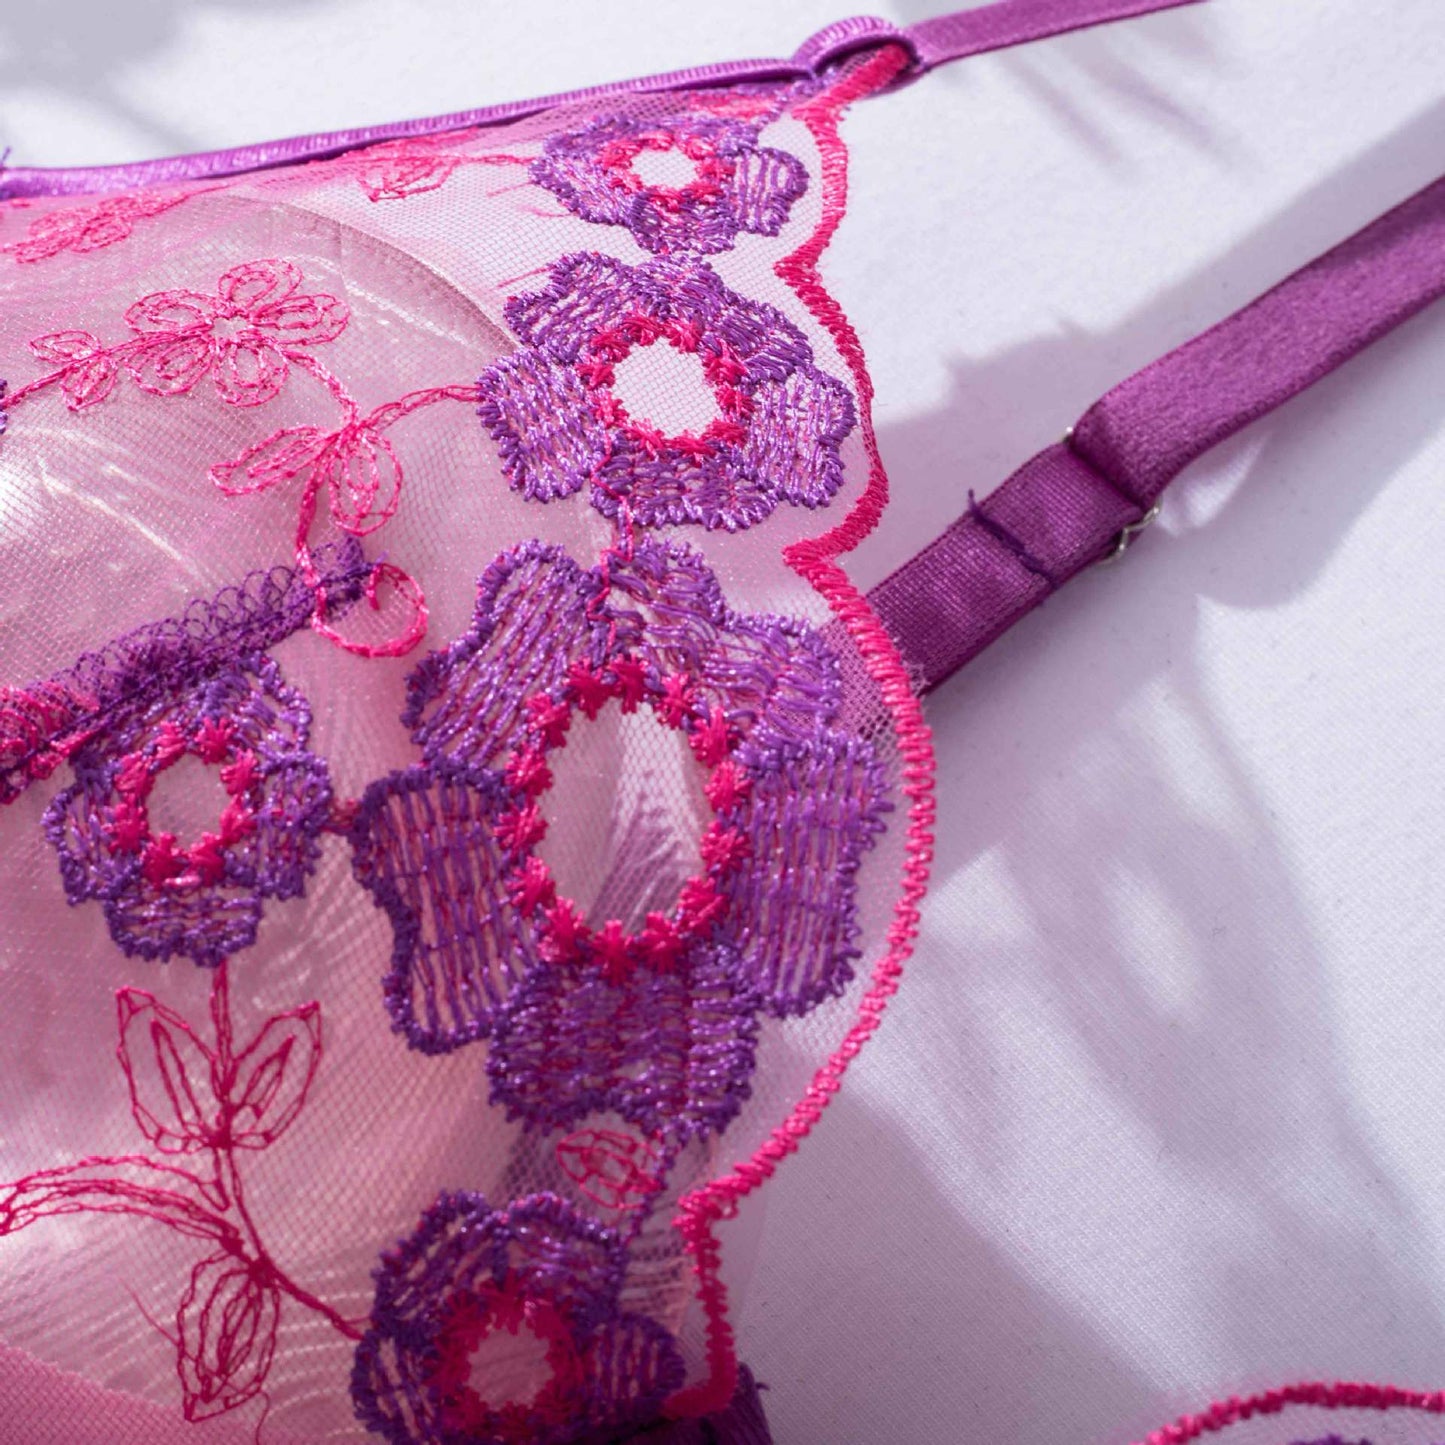 Violet Blossom Delight Lingerie Set: Floral Embroidery, Underwire Bra, and Unique Garter Belt